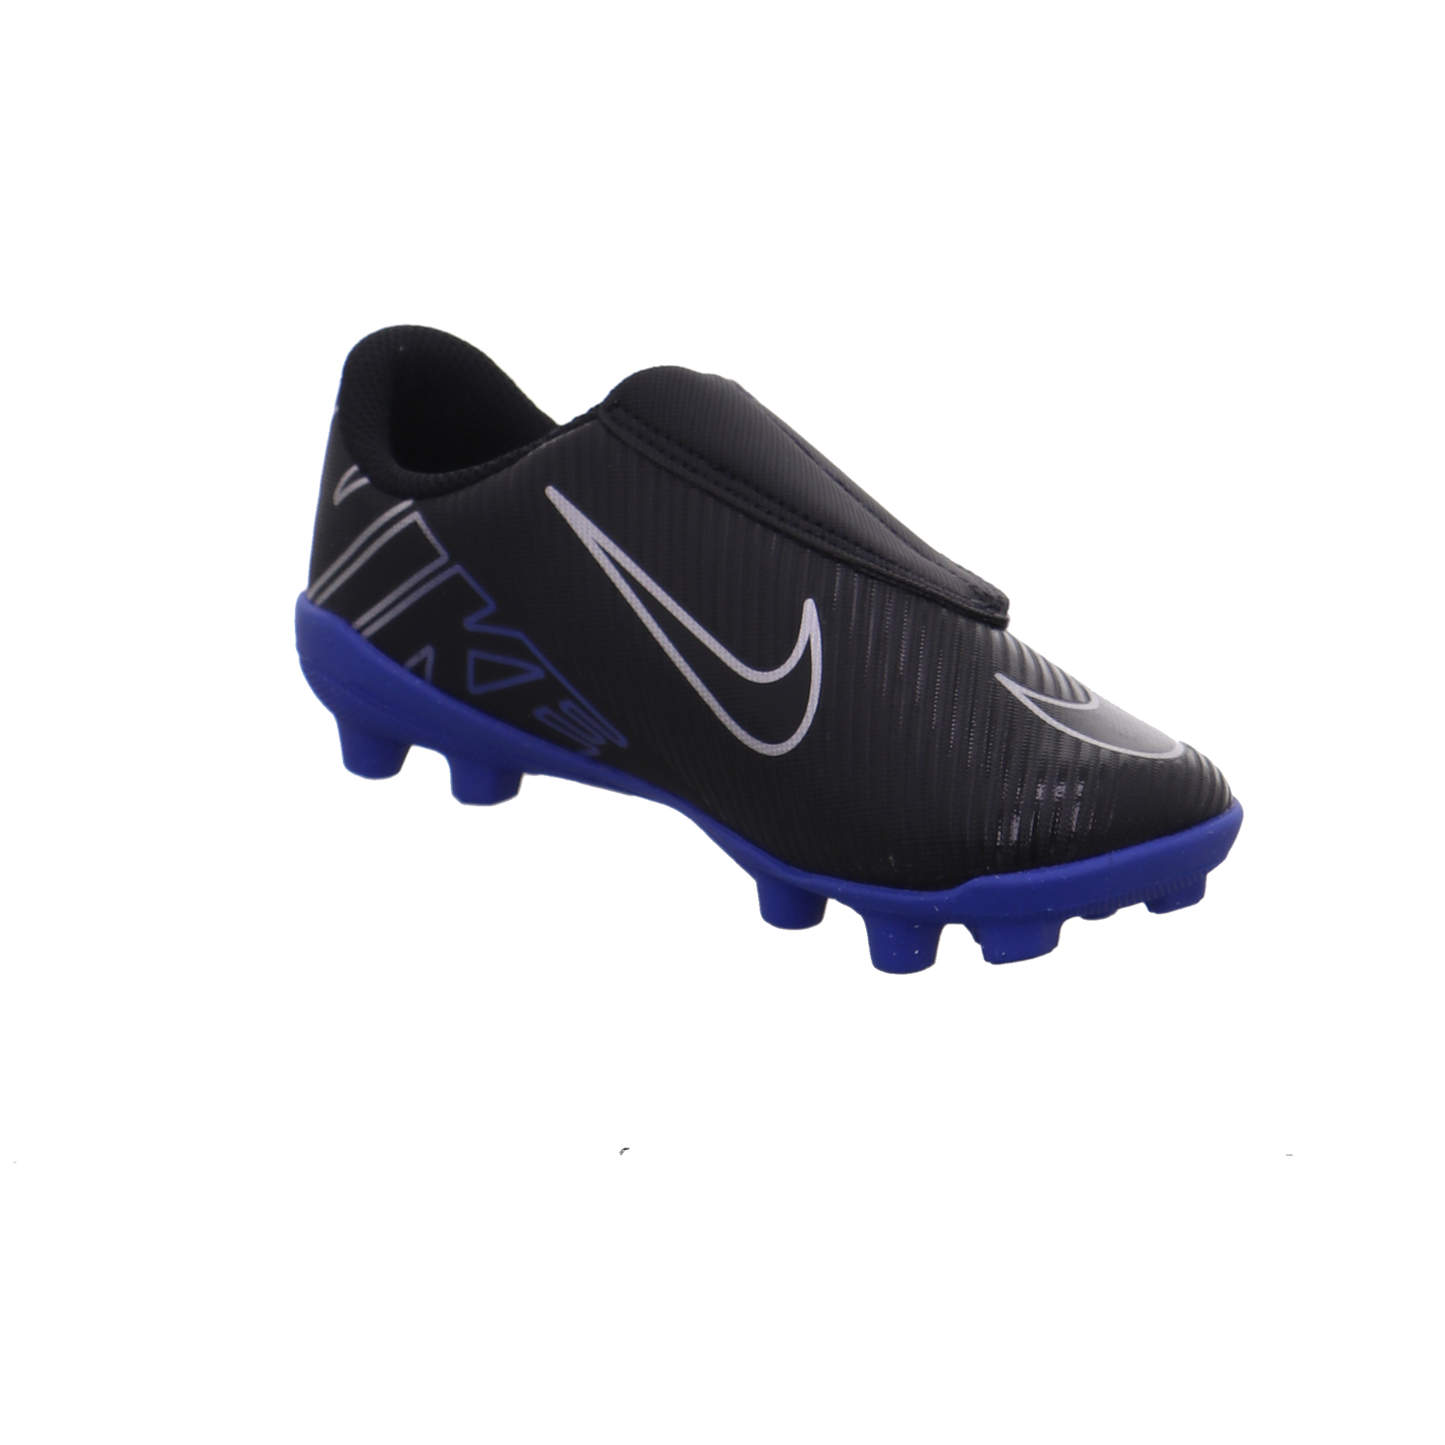 Nike Fußballschuhe schwarz kombi Bild7